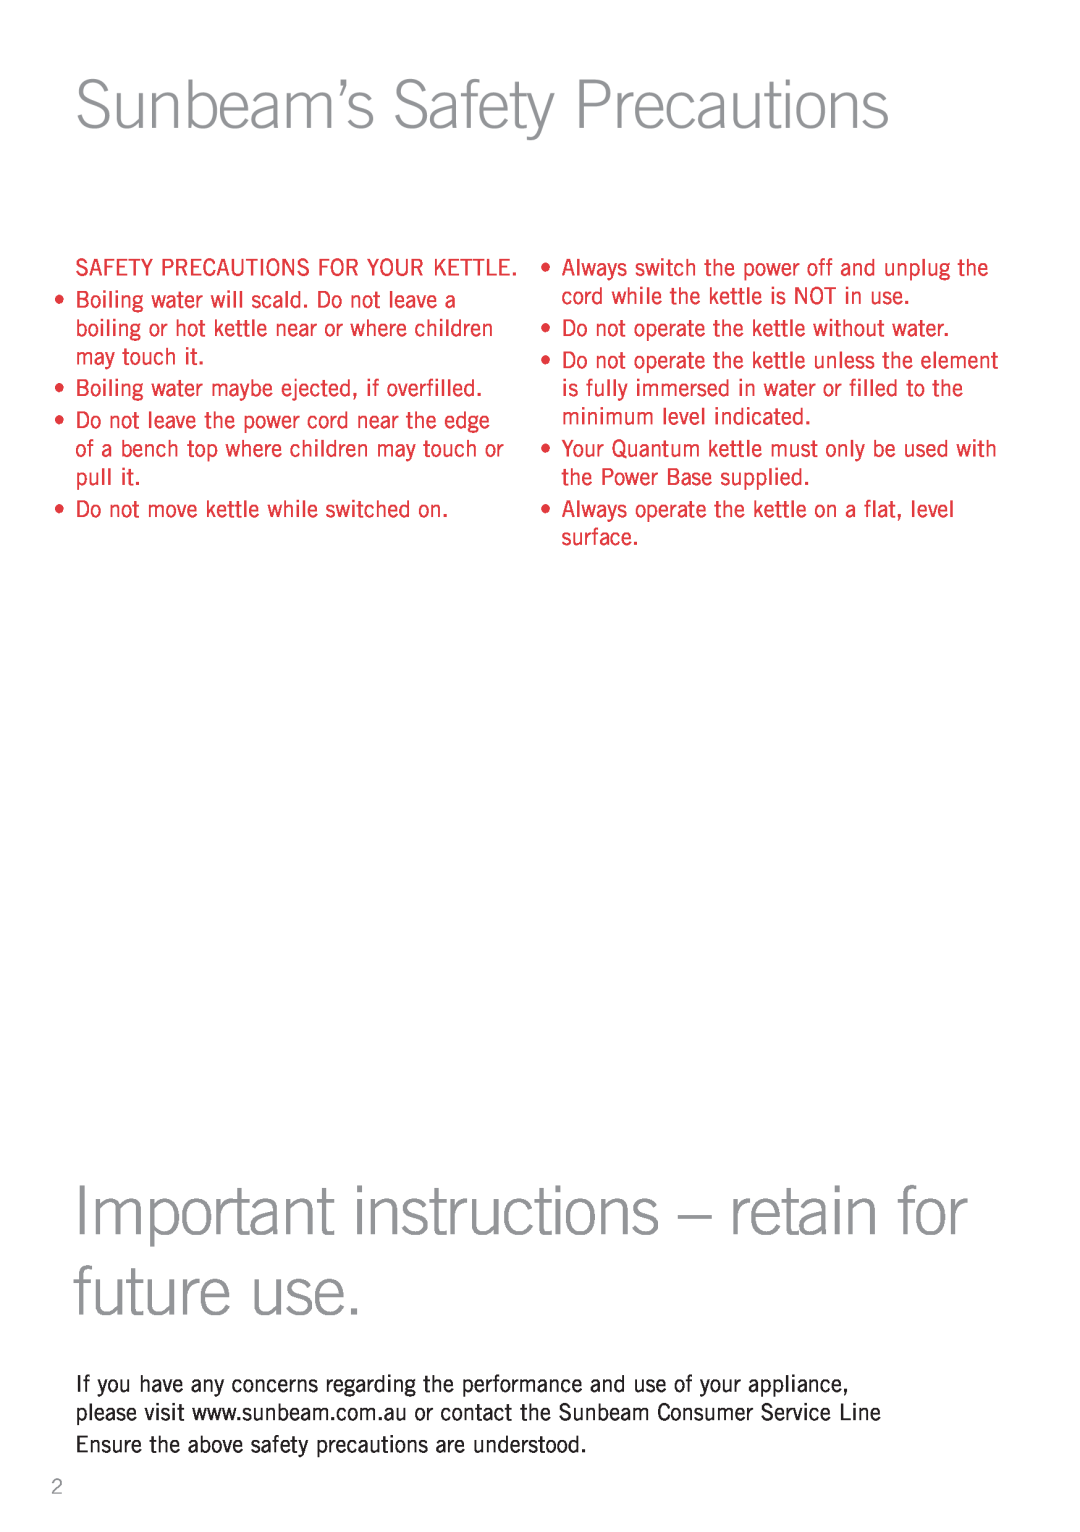 Sunbeam KE3560 manual Sunbeam’s Safety Precautions, Important instructions - retain for future use 